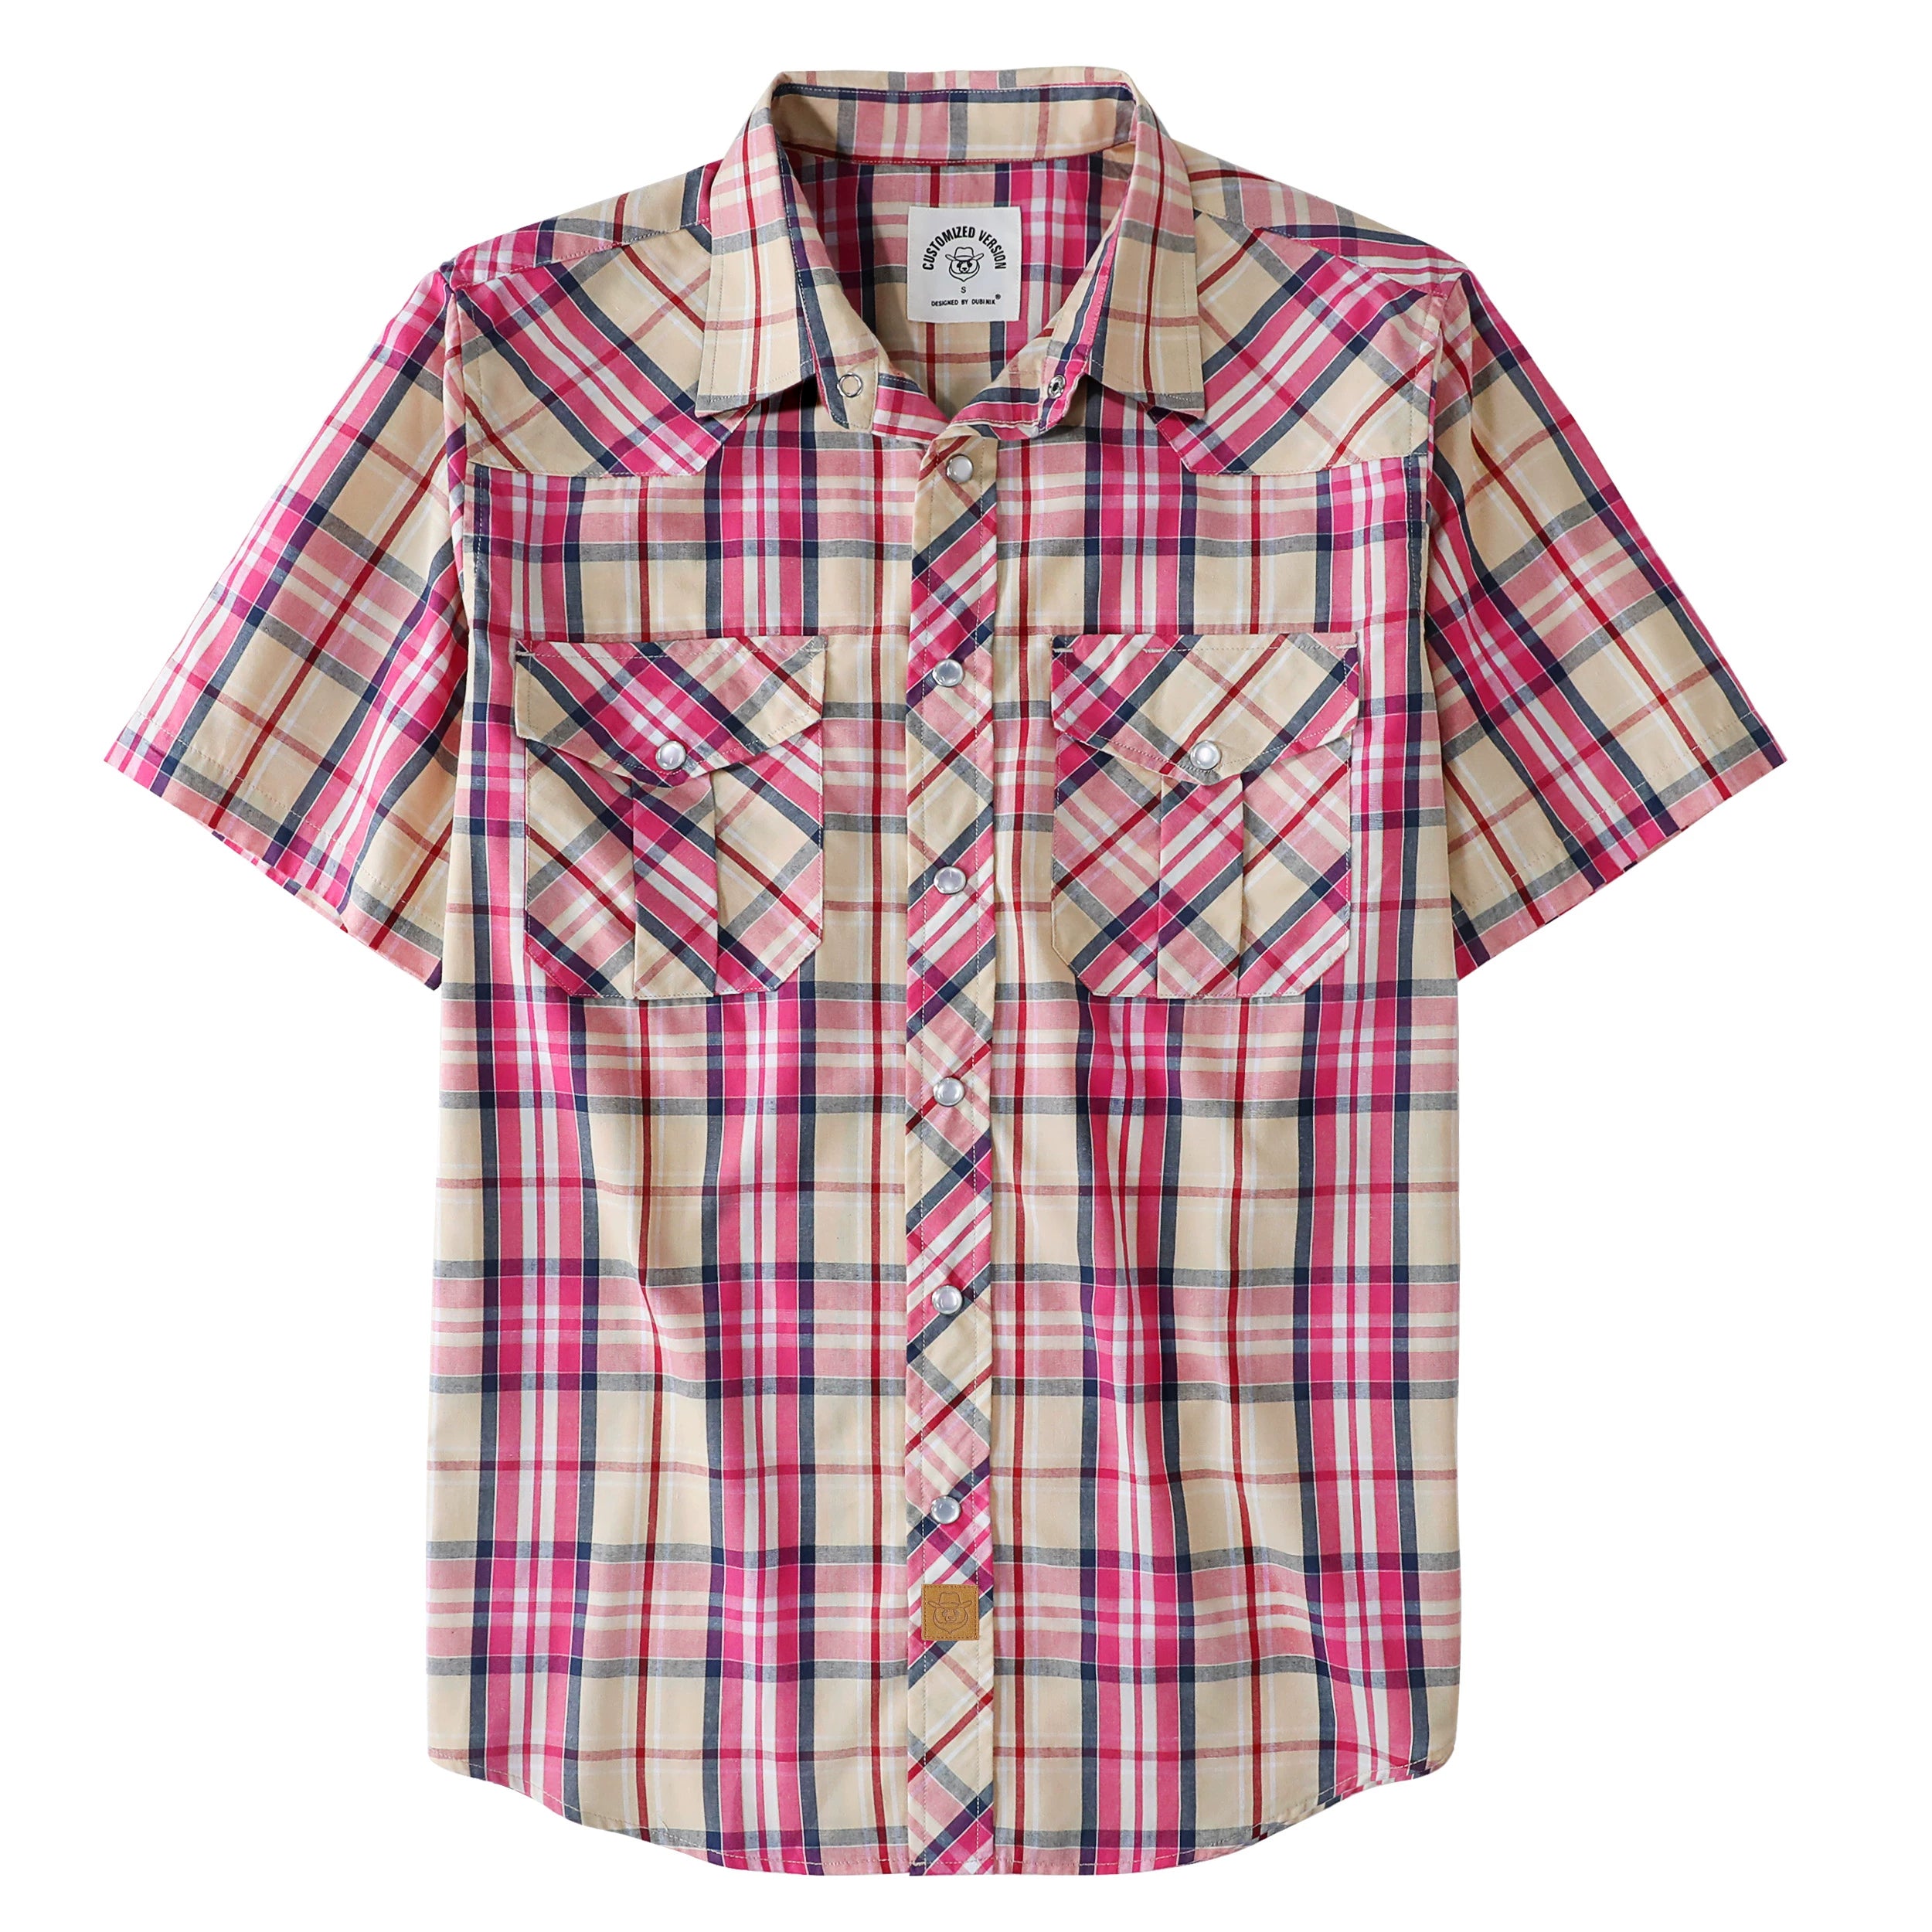 Dubinik® Western Shirts for Men Short Sleeve Plaid Pearl Snap Shirts for Men Button Up Shirt Cowboy Casual Work Shirt#41023